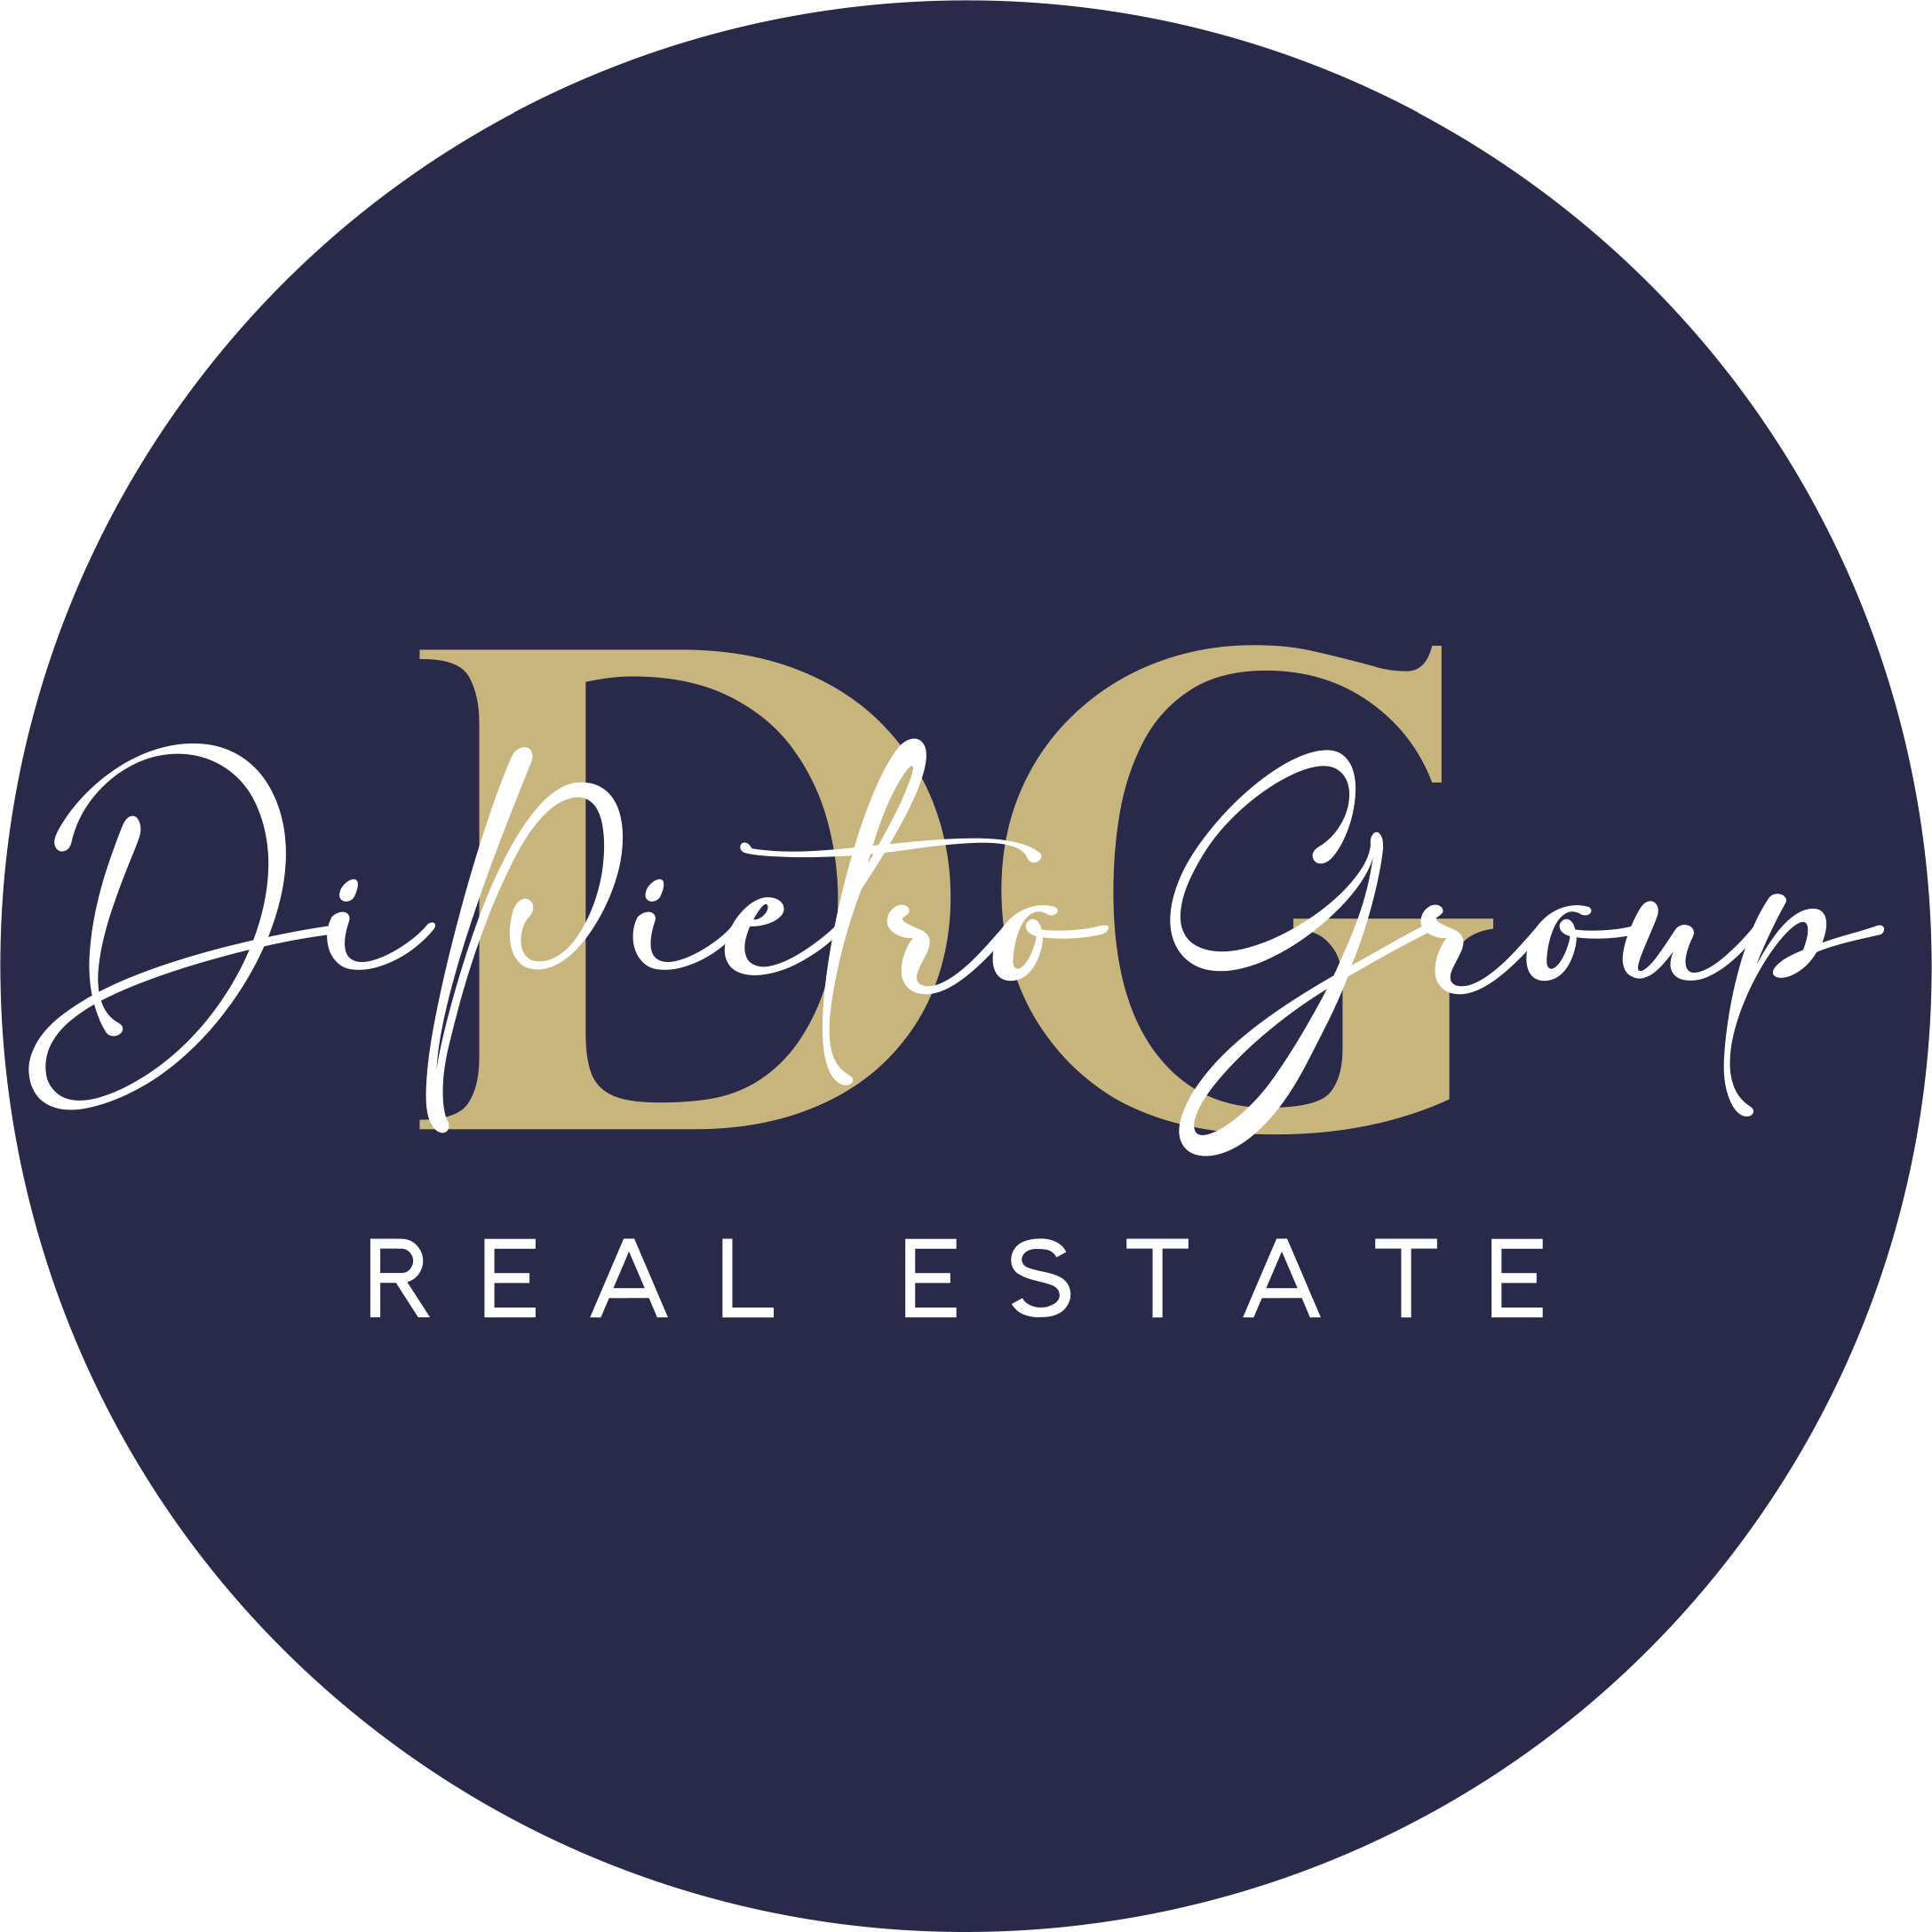 DiPietro Group Real Estate